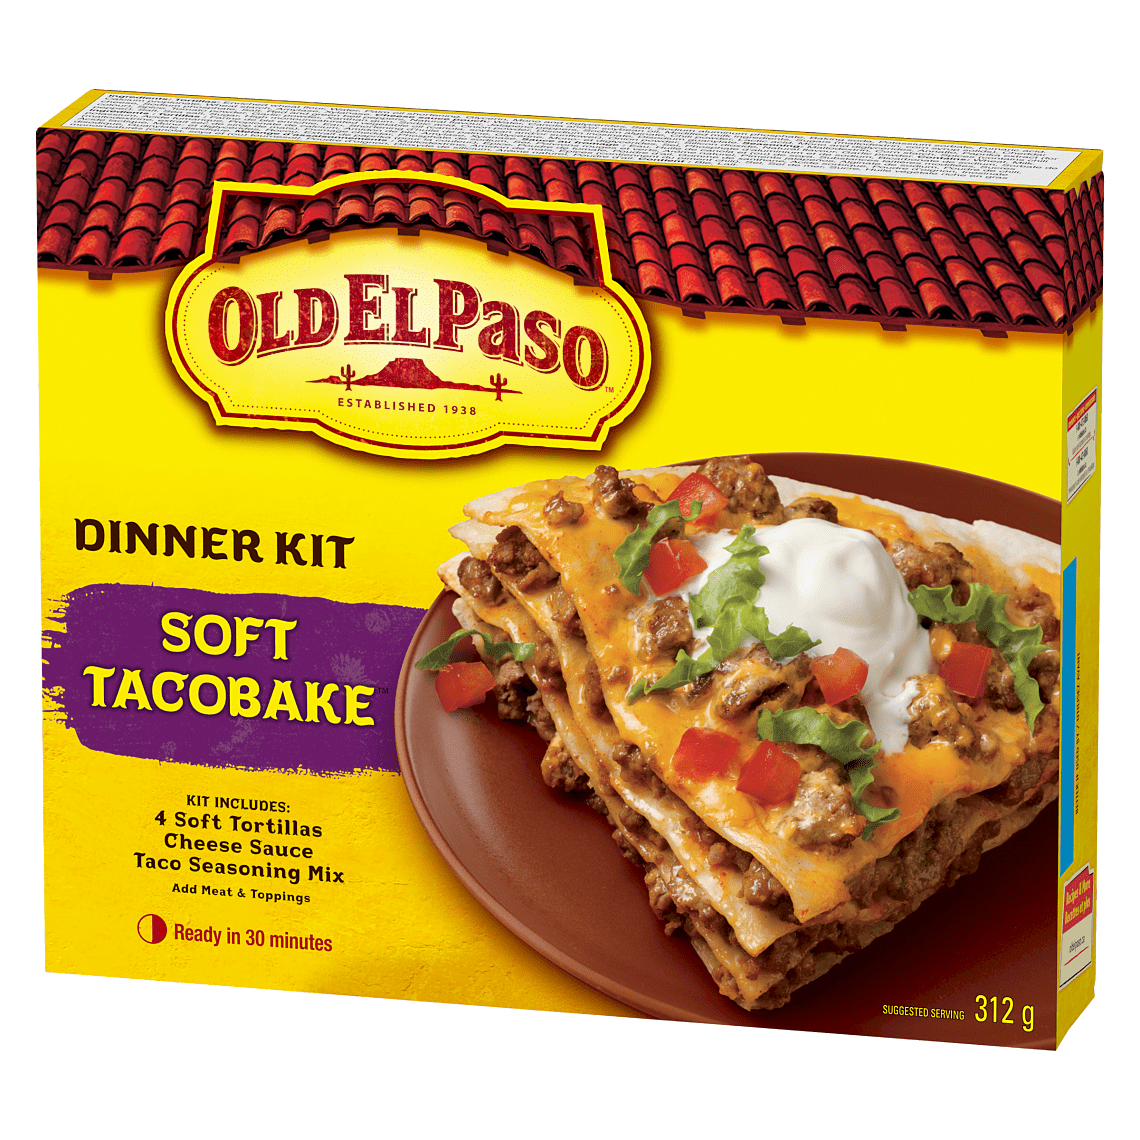 Soft Taco Bake Dinner Kit And Irresistible Taste Old El Paso 5245